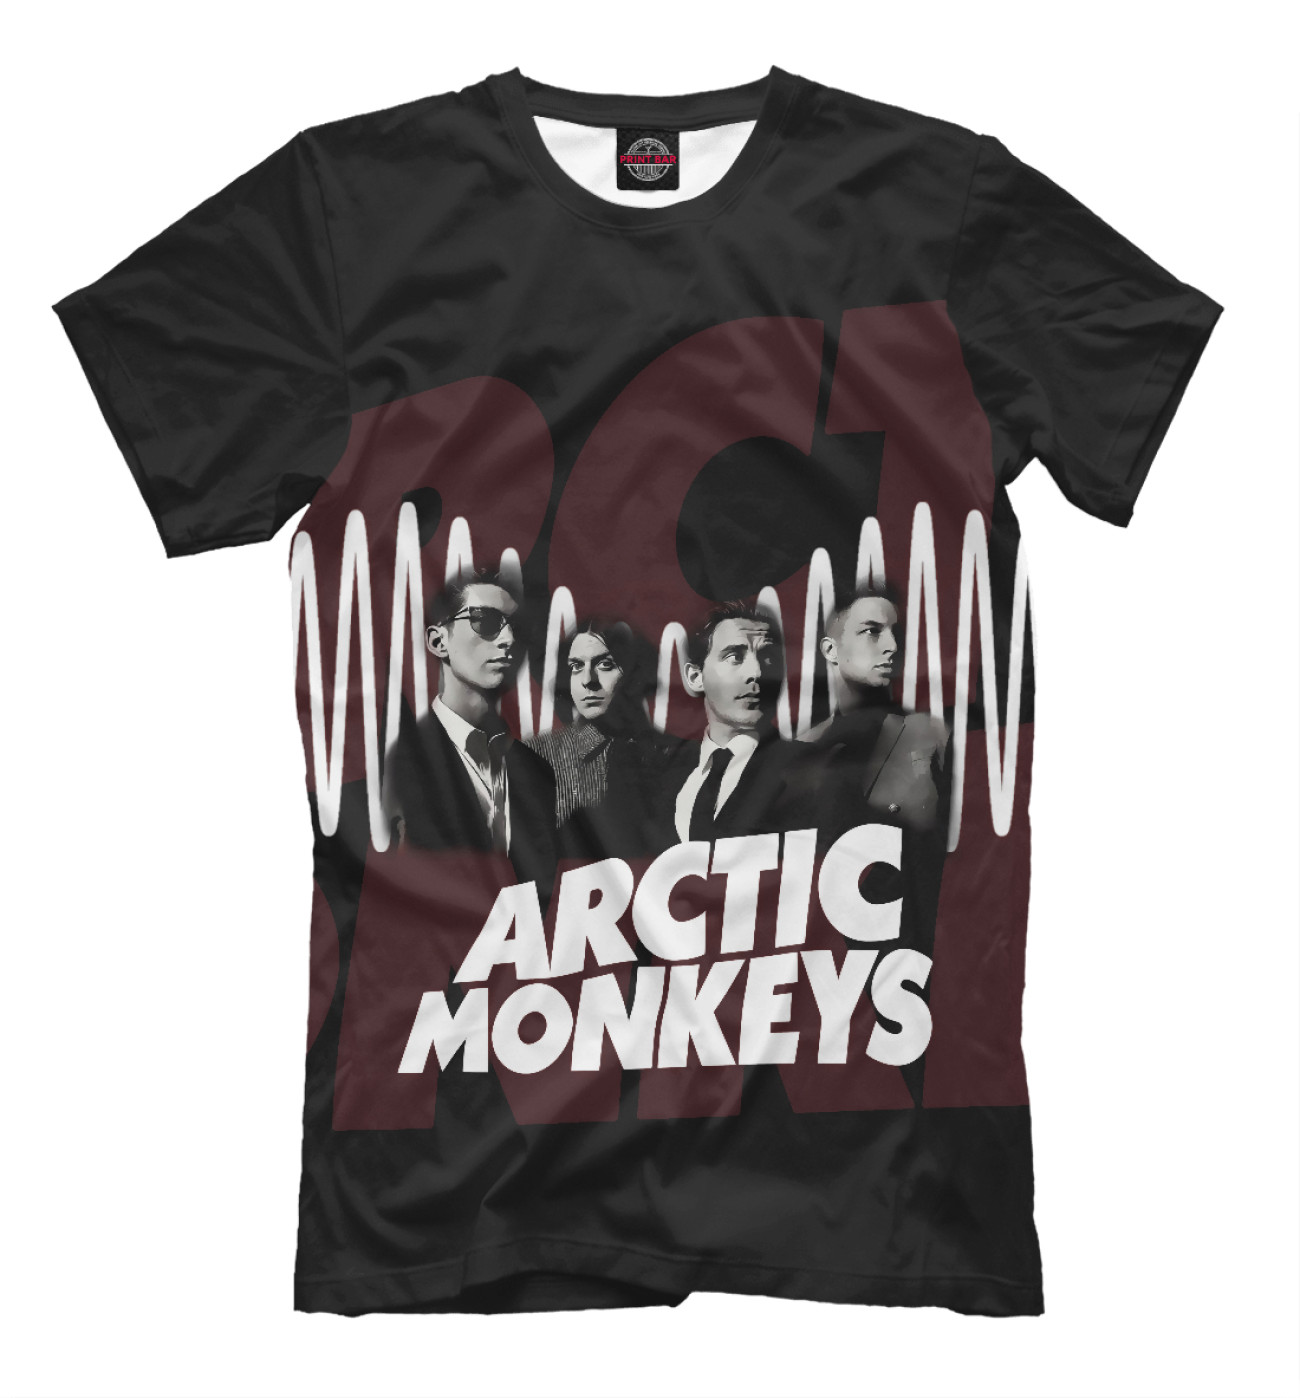 Мужская Футболка Arctic Monkeys, артикул: AMK-816046-fut-2